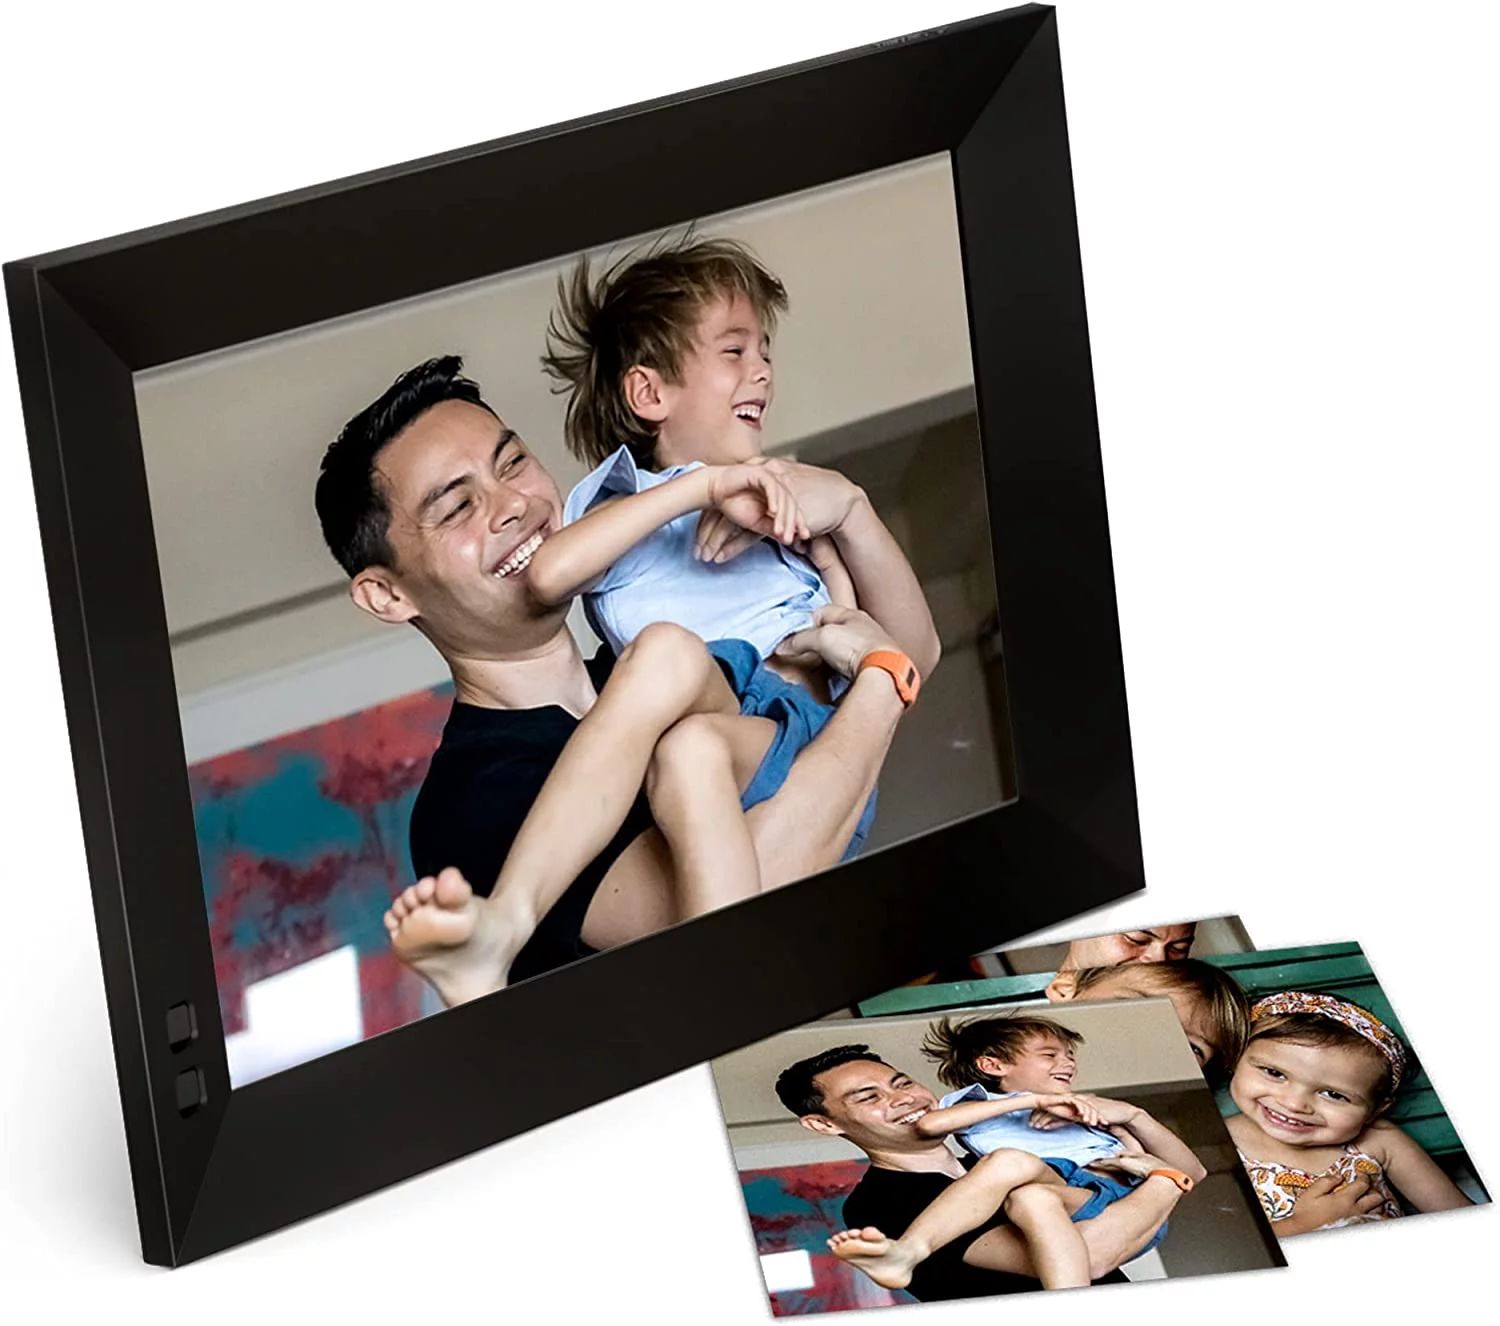 Nixplay 10.1 inch Smart Digital Photo Frame with WiFi (W10F) - Black - Includes 1 year of Nixplay... | Walmart (US)